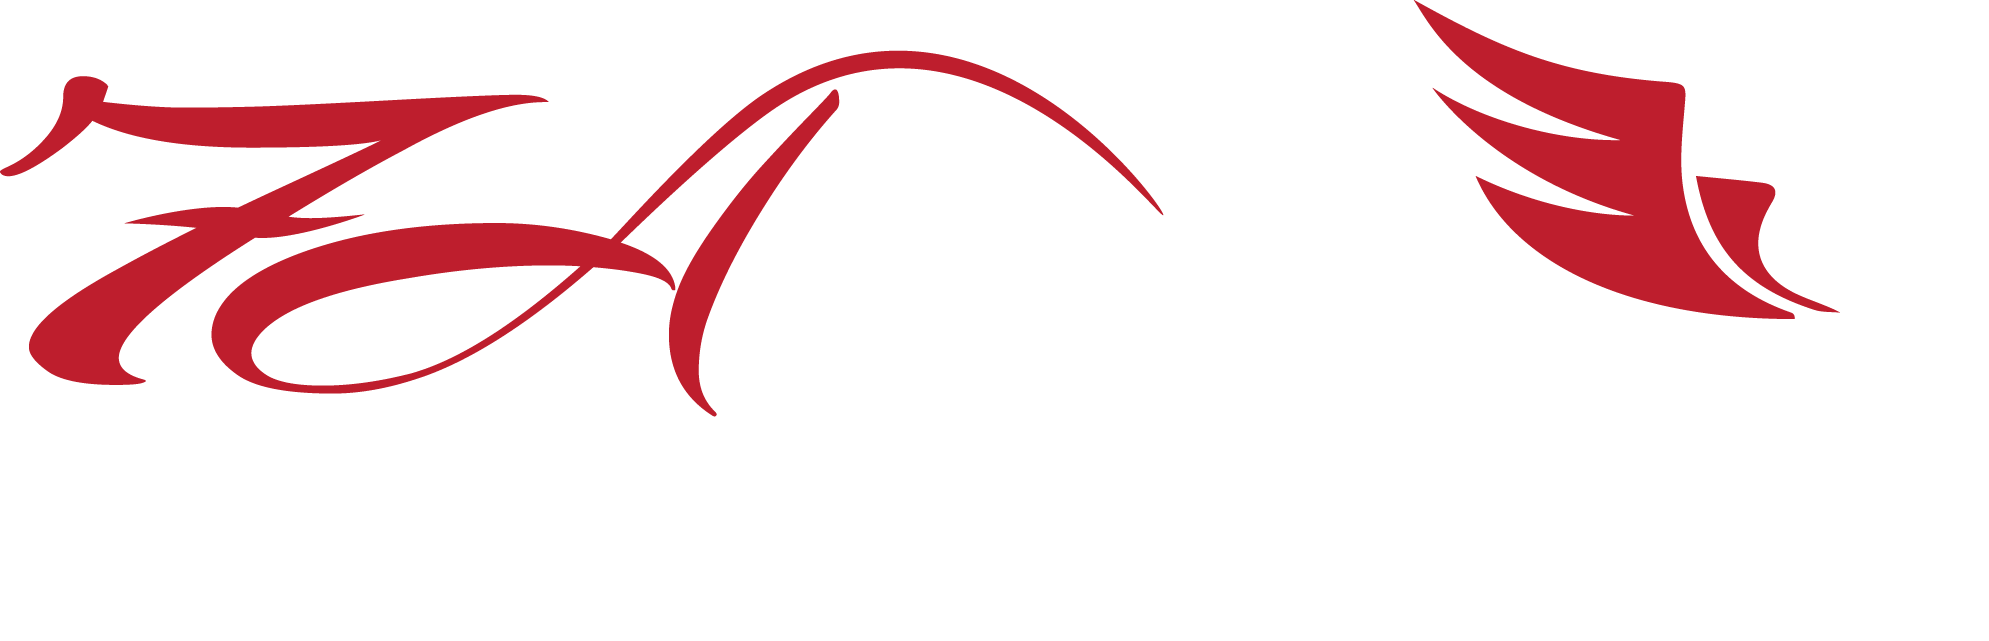 7nAbove Coach Bus Company in Miami Florida